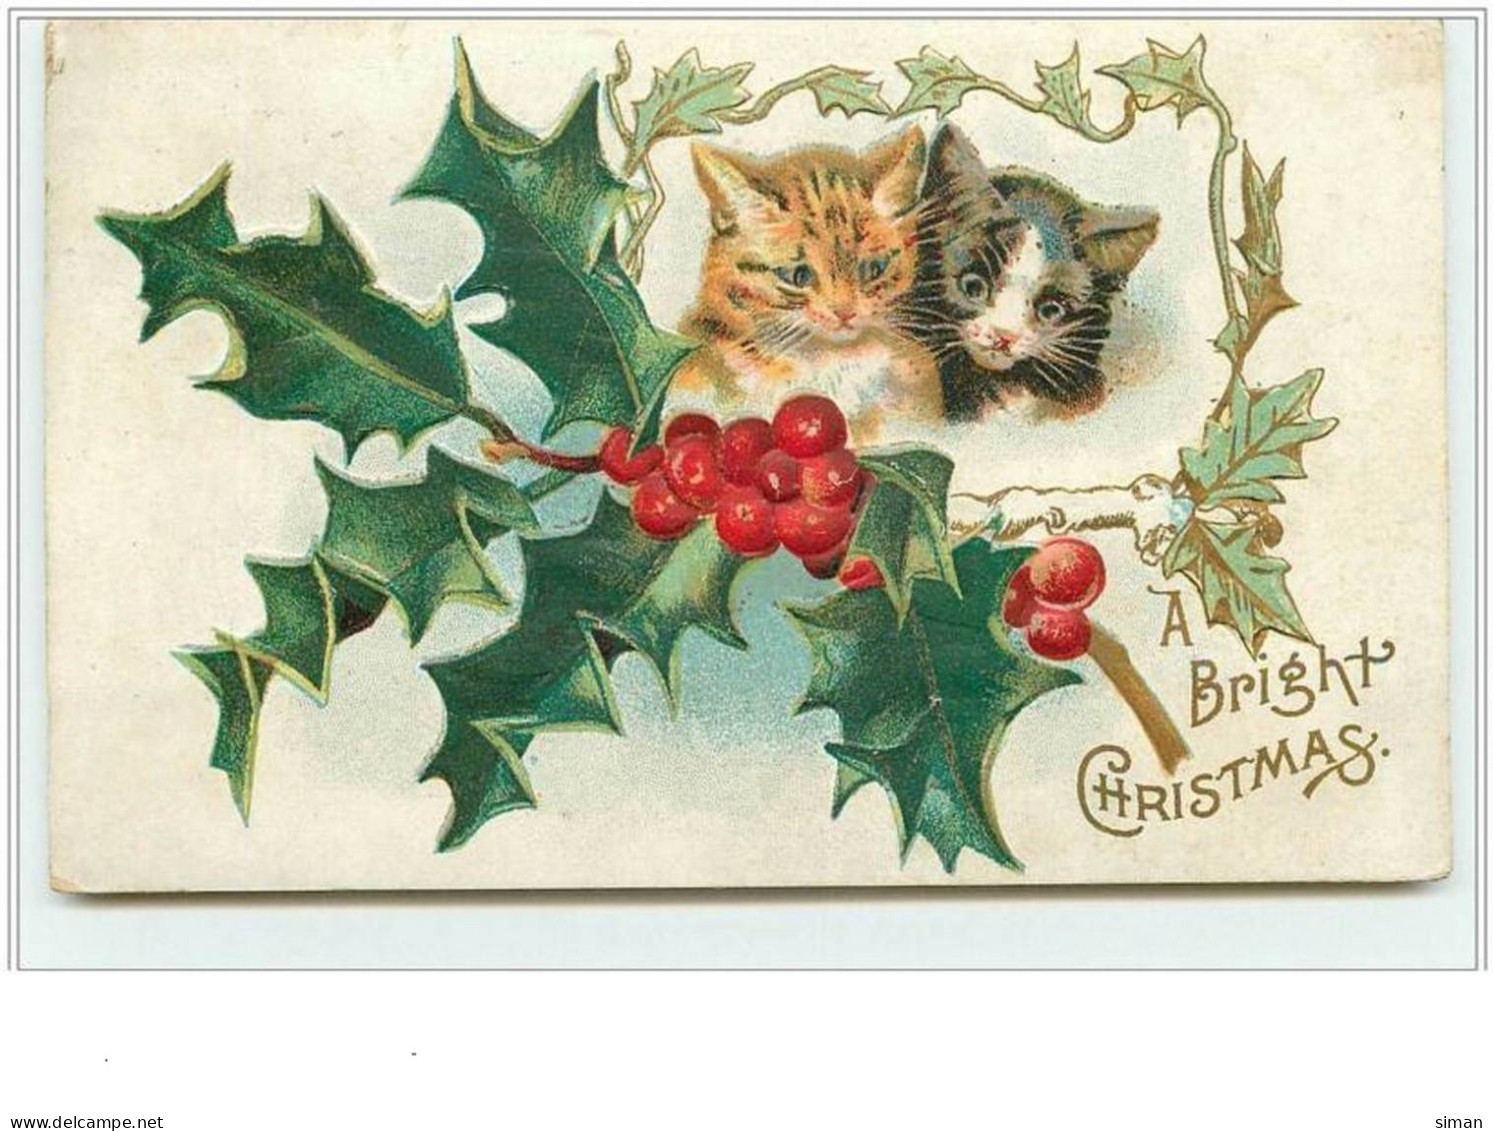 N°2276 - Carte Gaufrée - A Bright Christmas - Chats - Chats